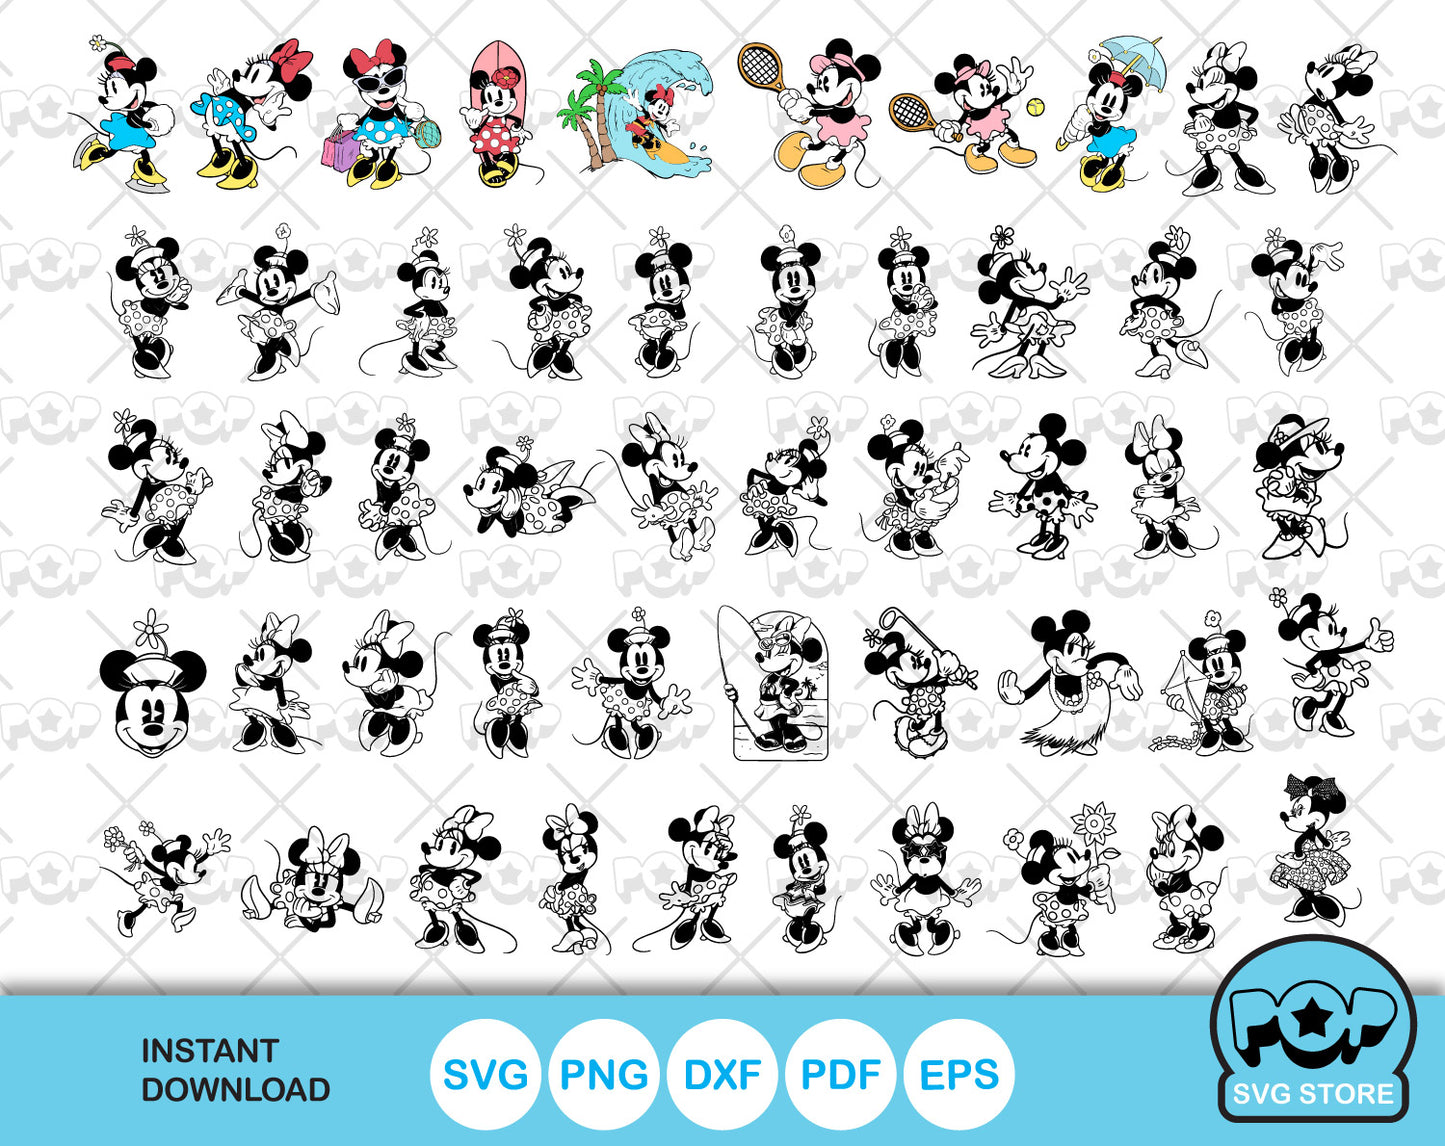 Classic Minnie Mouse 100 cliparts bundle, Minnie svg cut files for Cricut / Silhouette, Minnie Mouse png